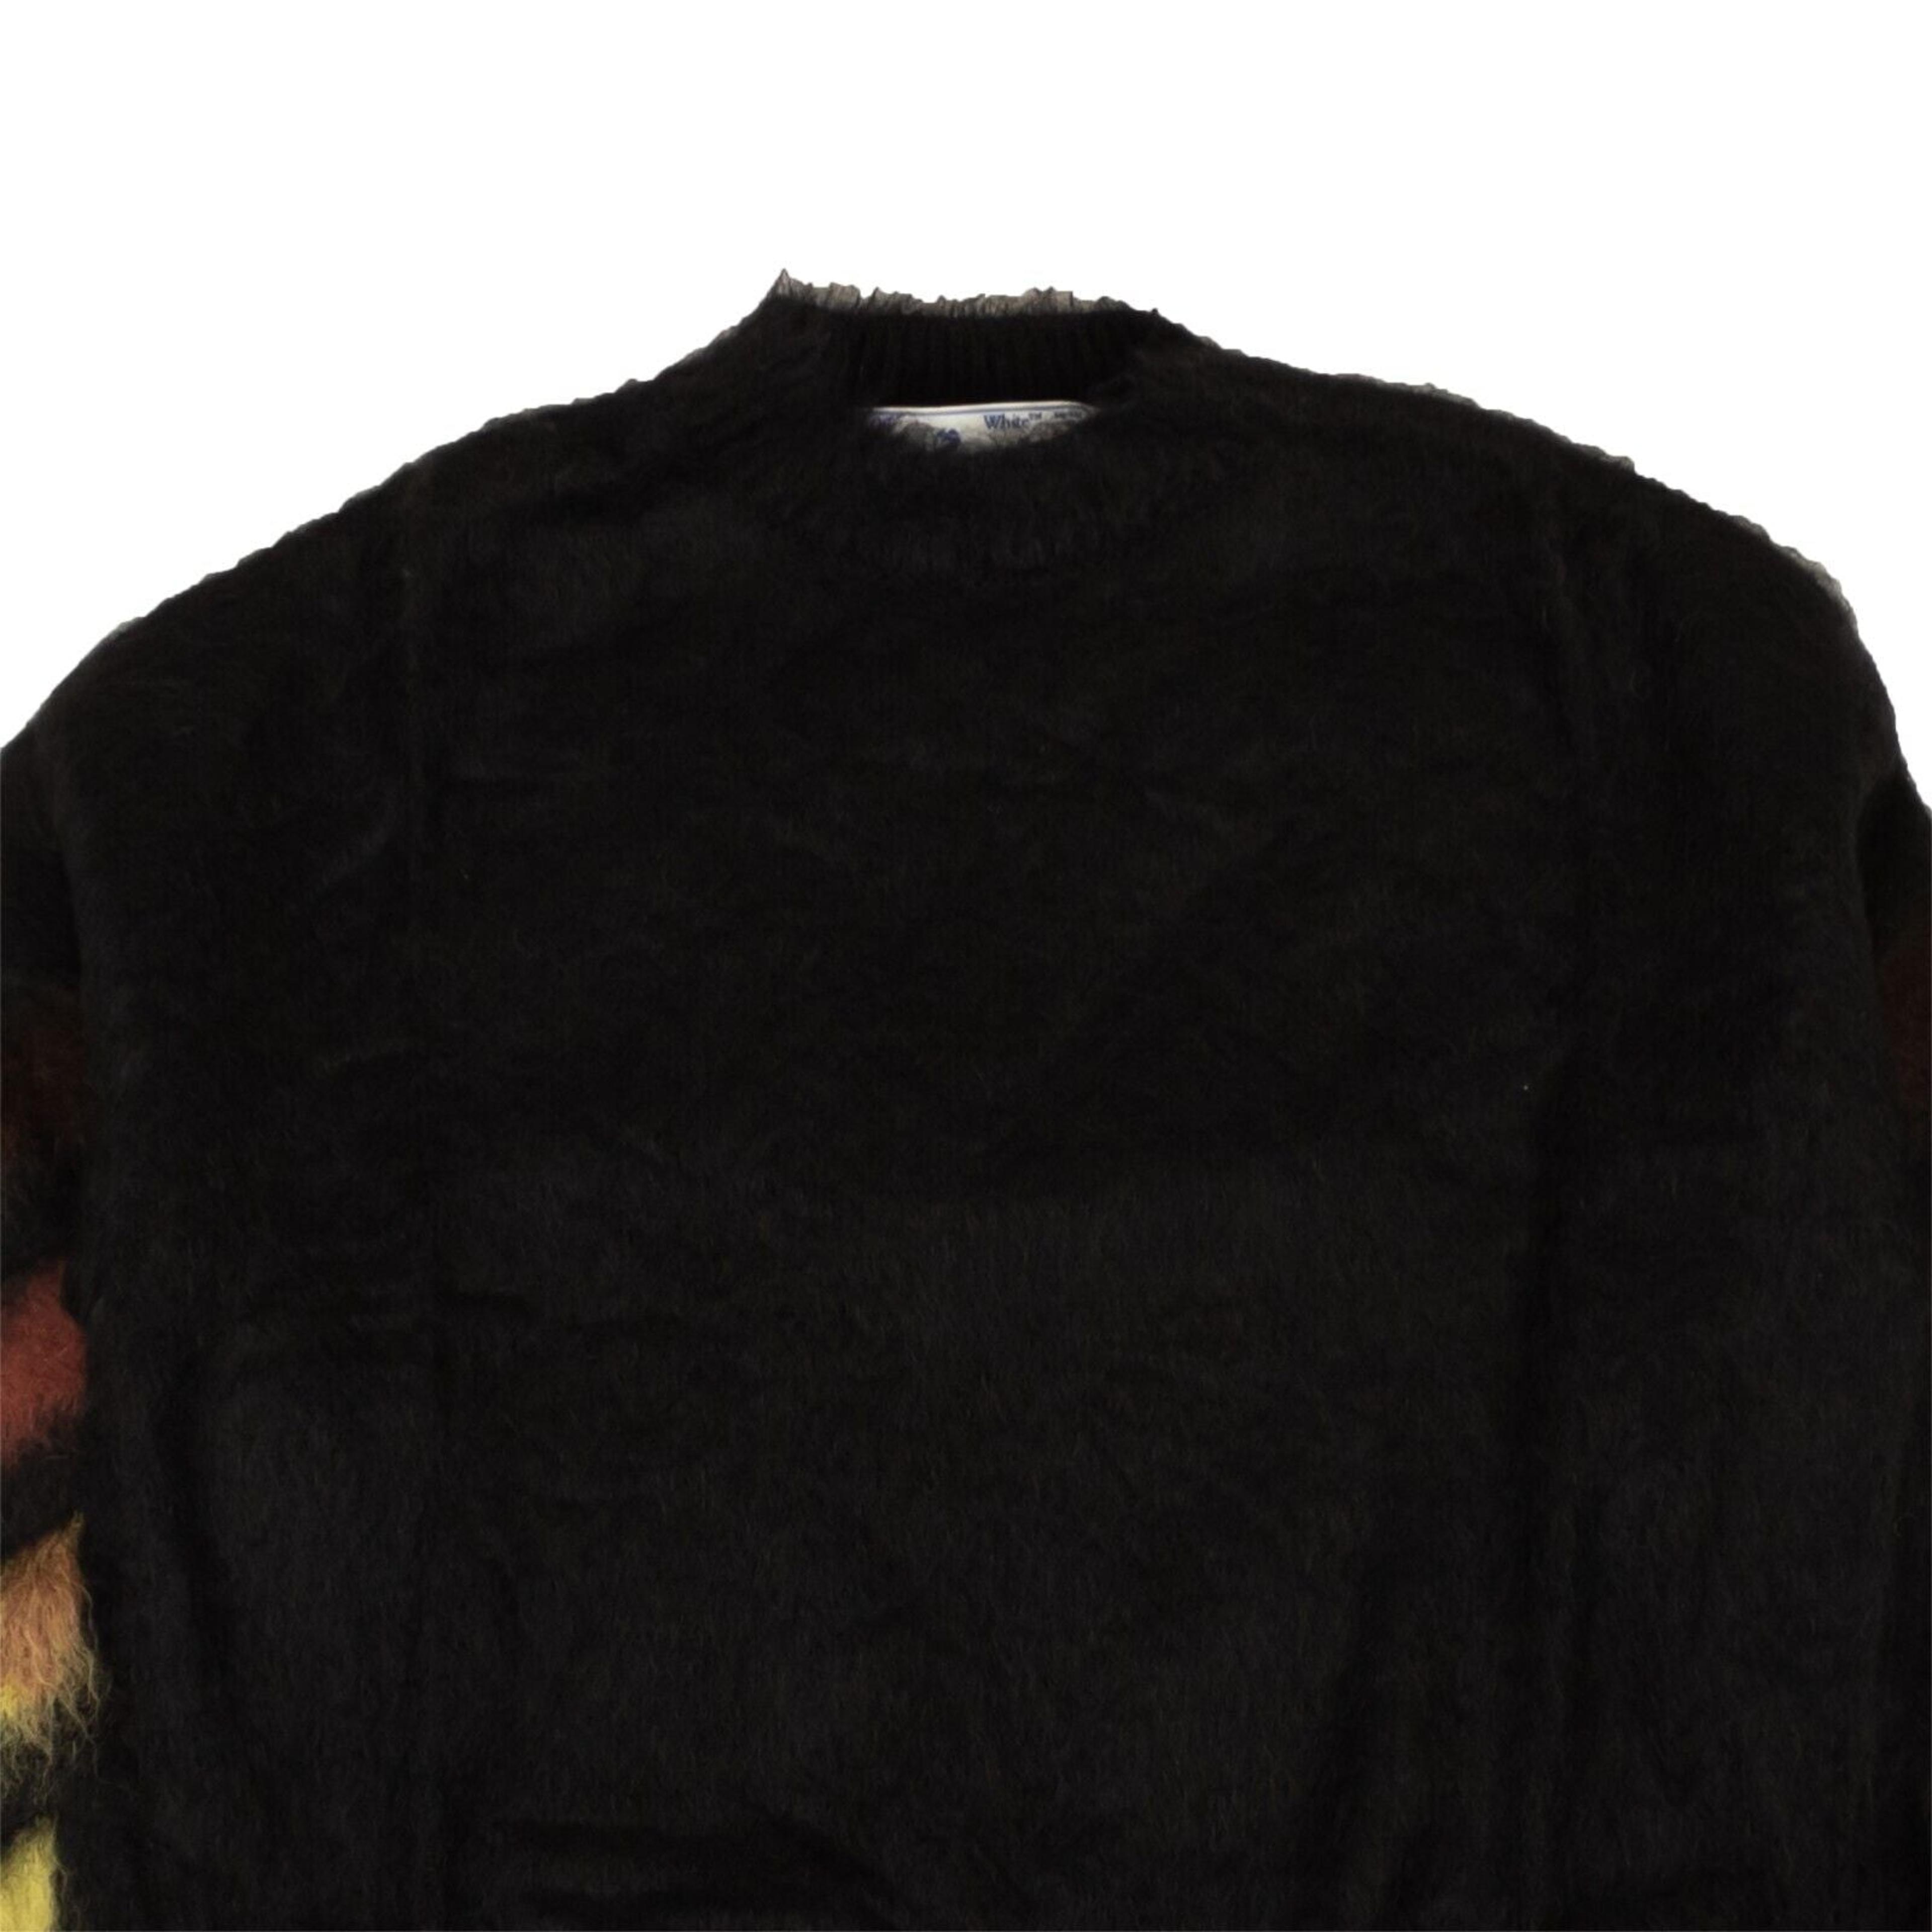 Alternate View 1 of Black Diag Mohair Crew Sweater